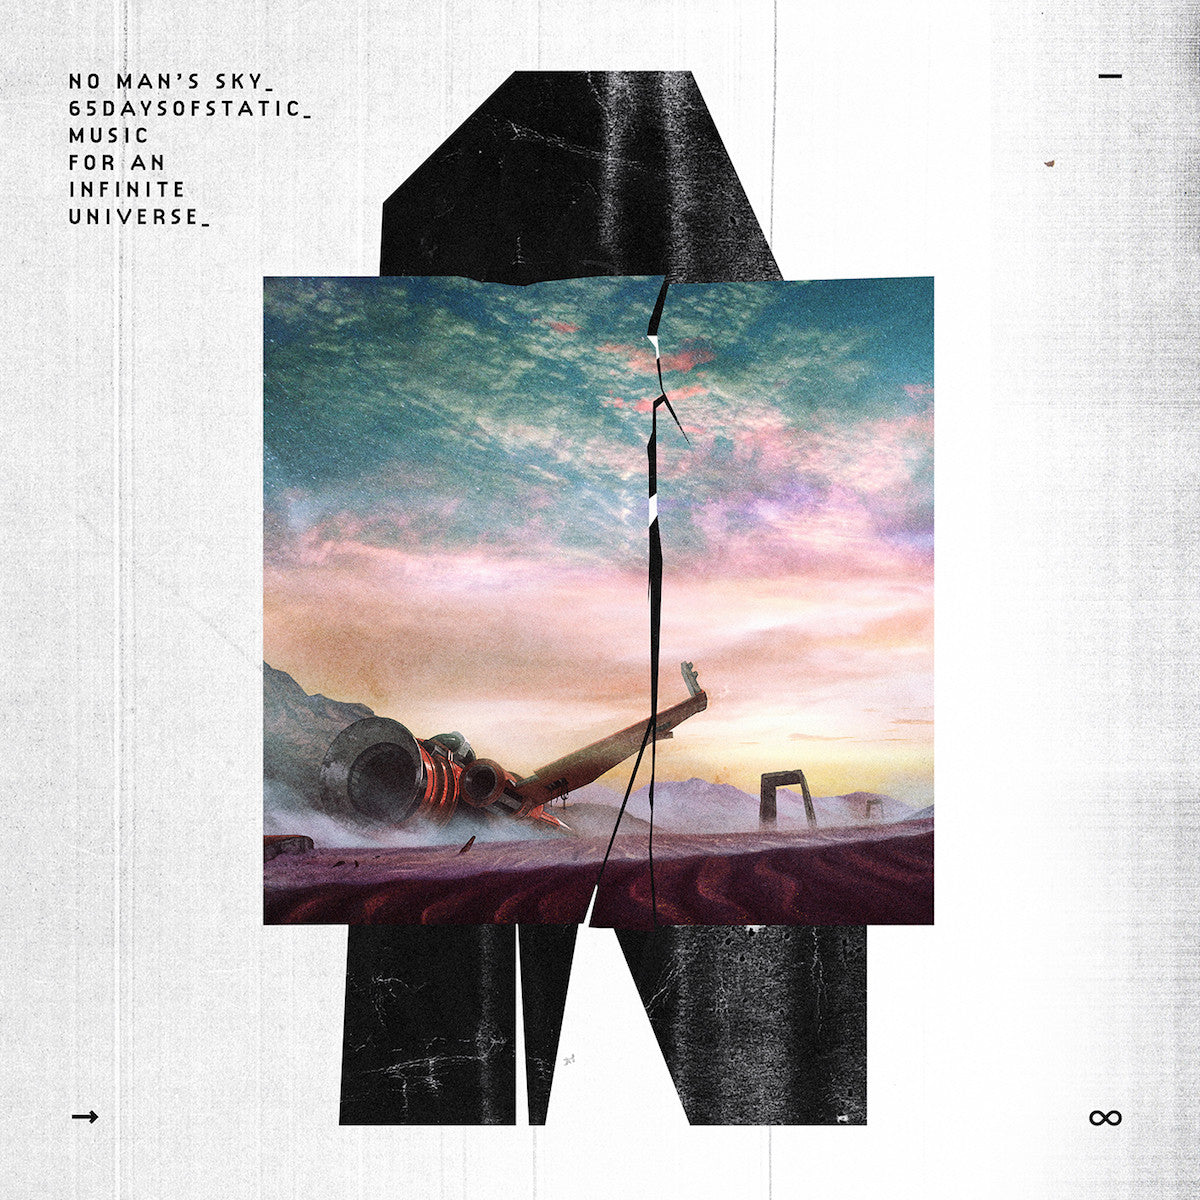 The No Man's Sky soundtrack album cover by Caspar Newbolt and John DeLucca